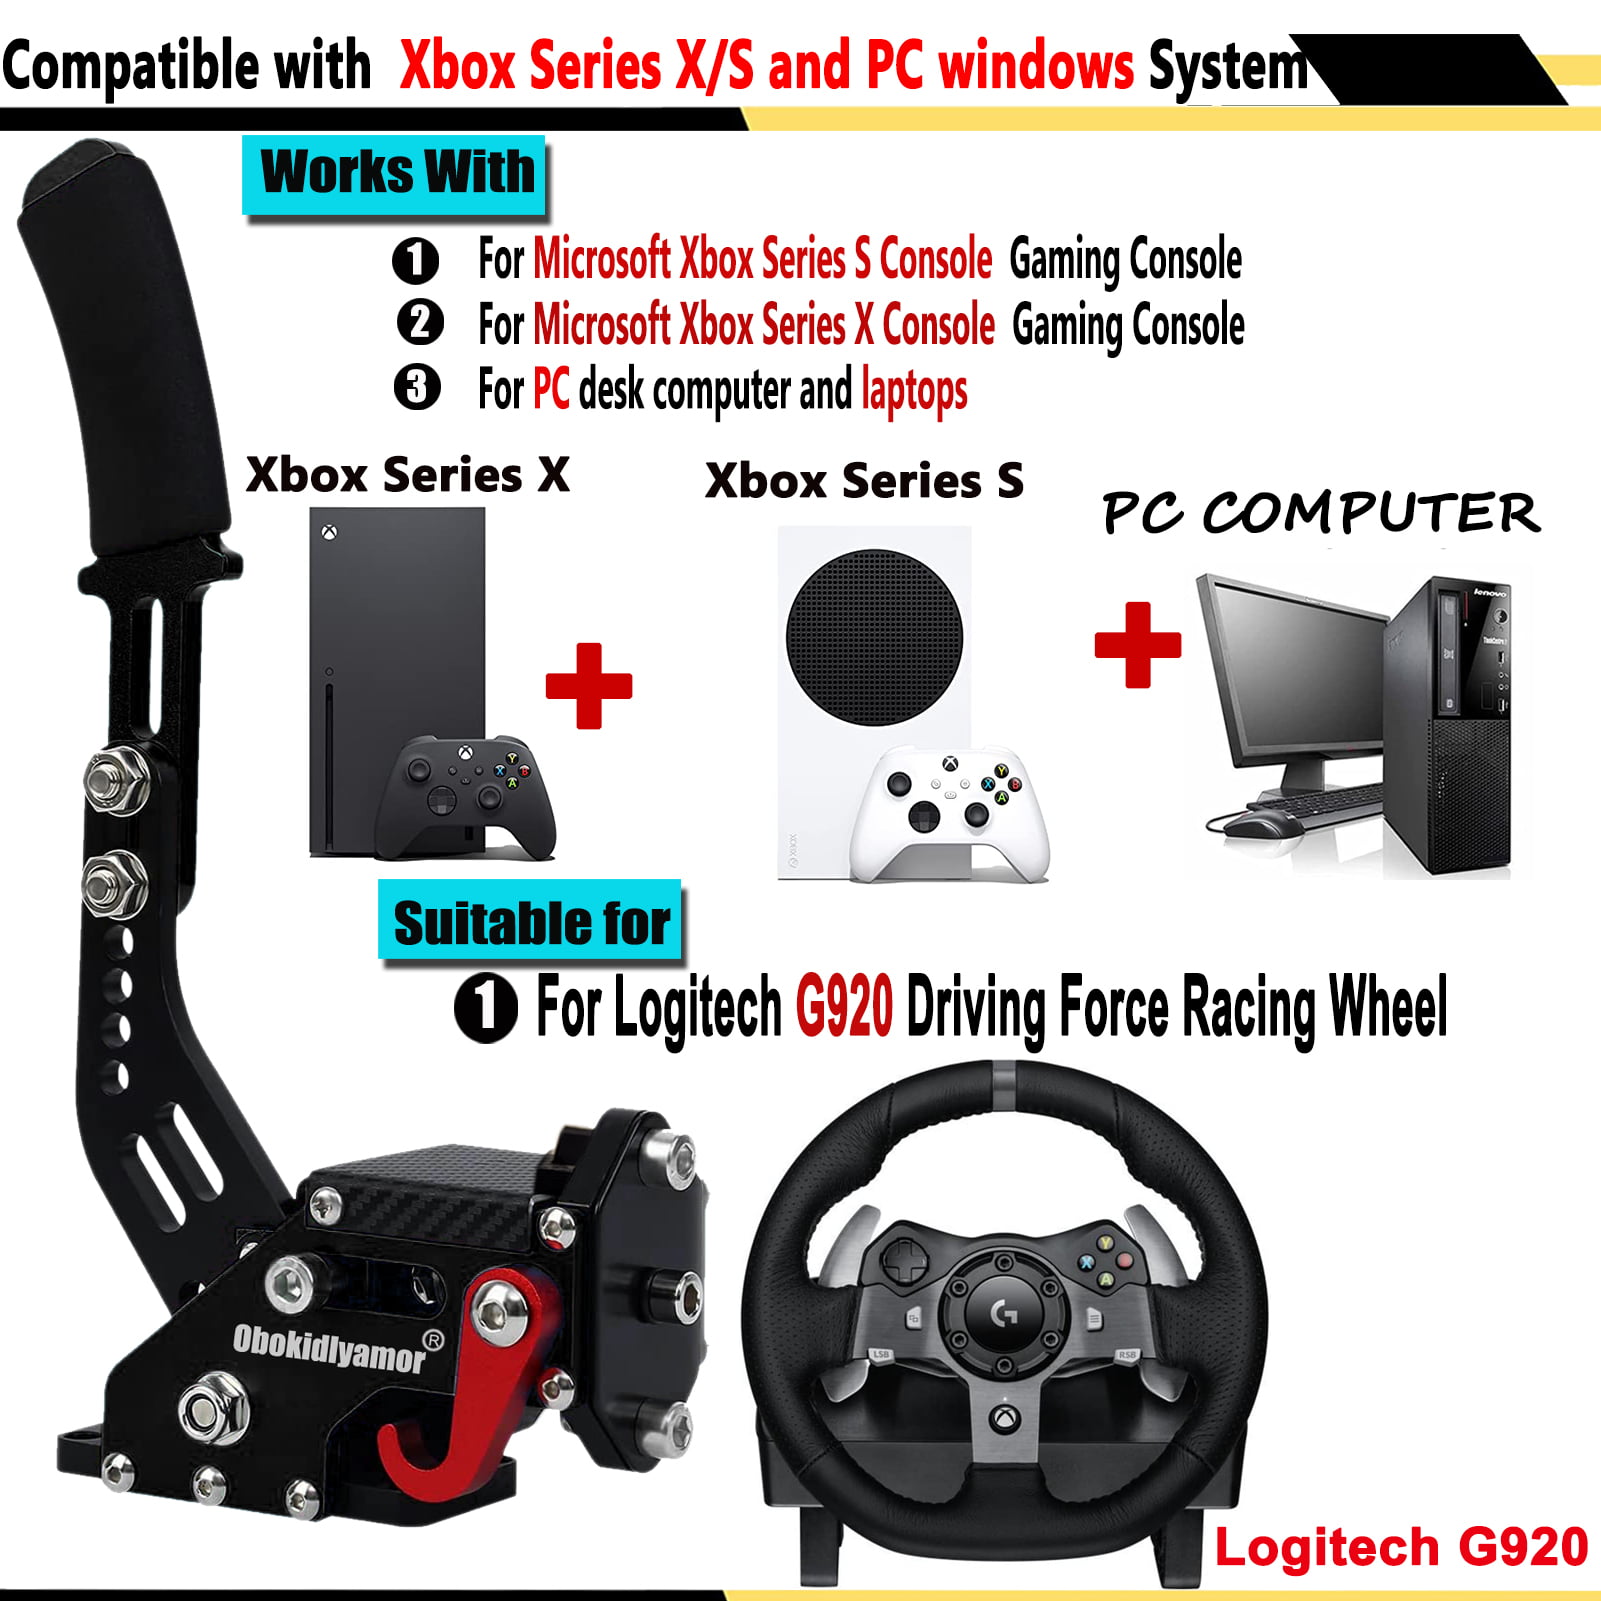 PC USB Handbrake 64Bit Racing Games Handbrake For Logitech G920 Racing Wheel on Xbox Series S/X Console; Only PC System USB Handbrake SIM With Clamp Racing Games - Walmart.com